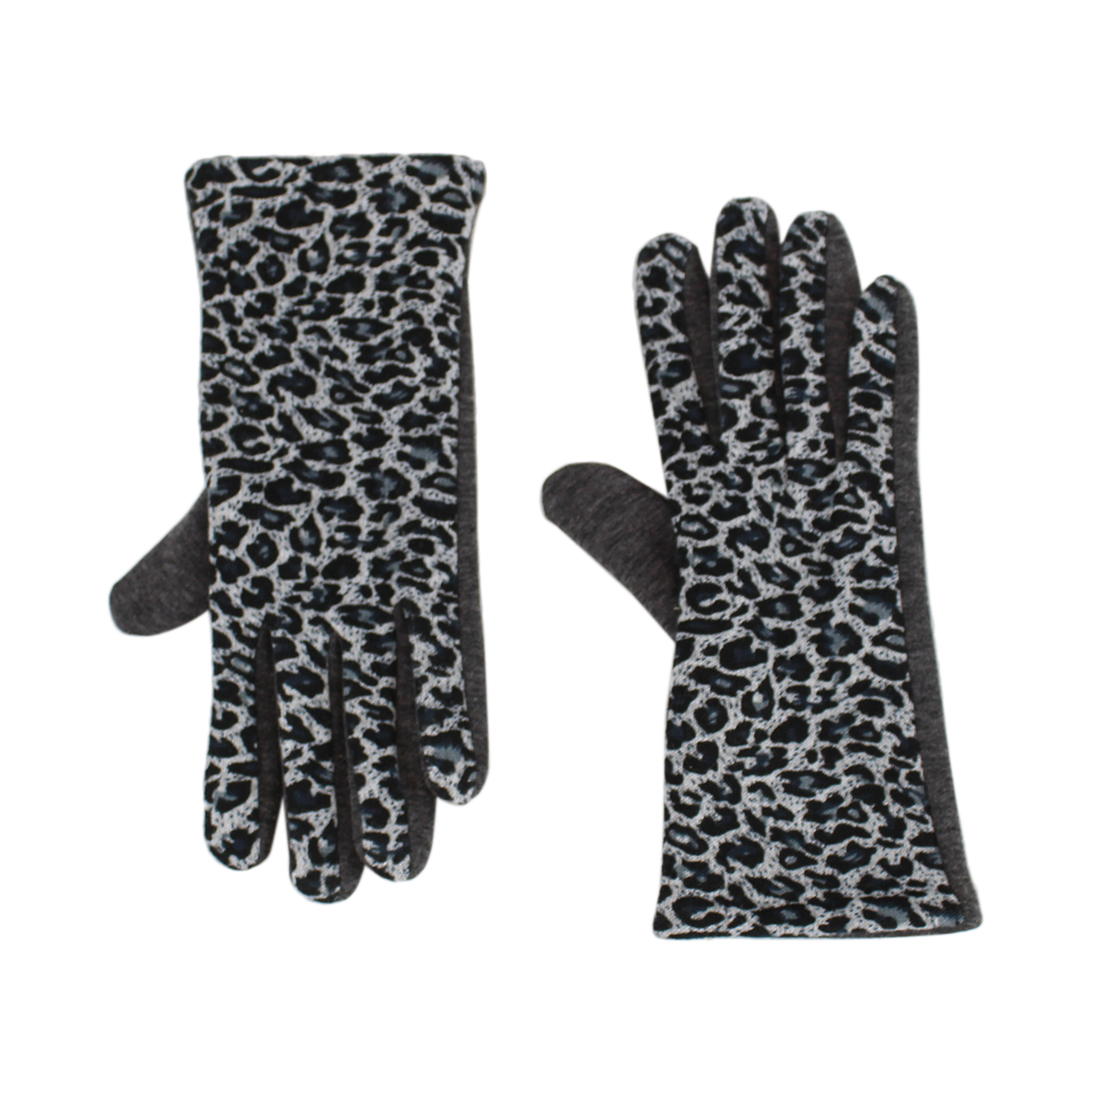 * Panther print design winter gloves